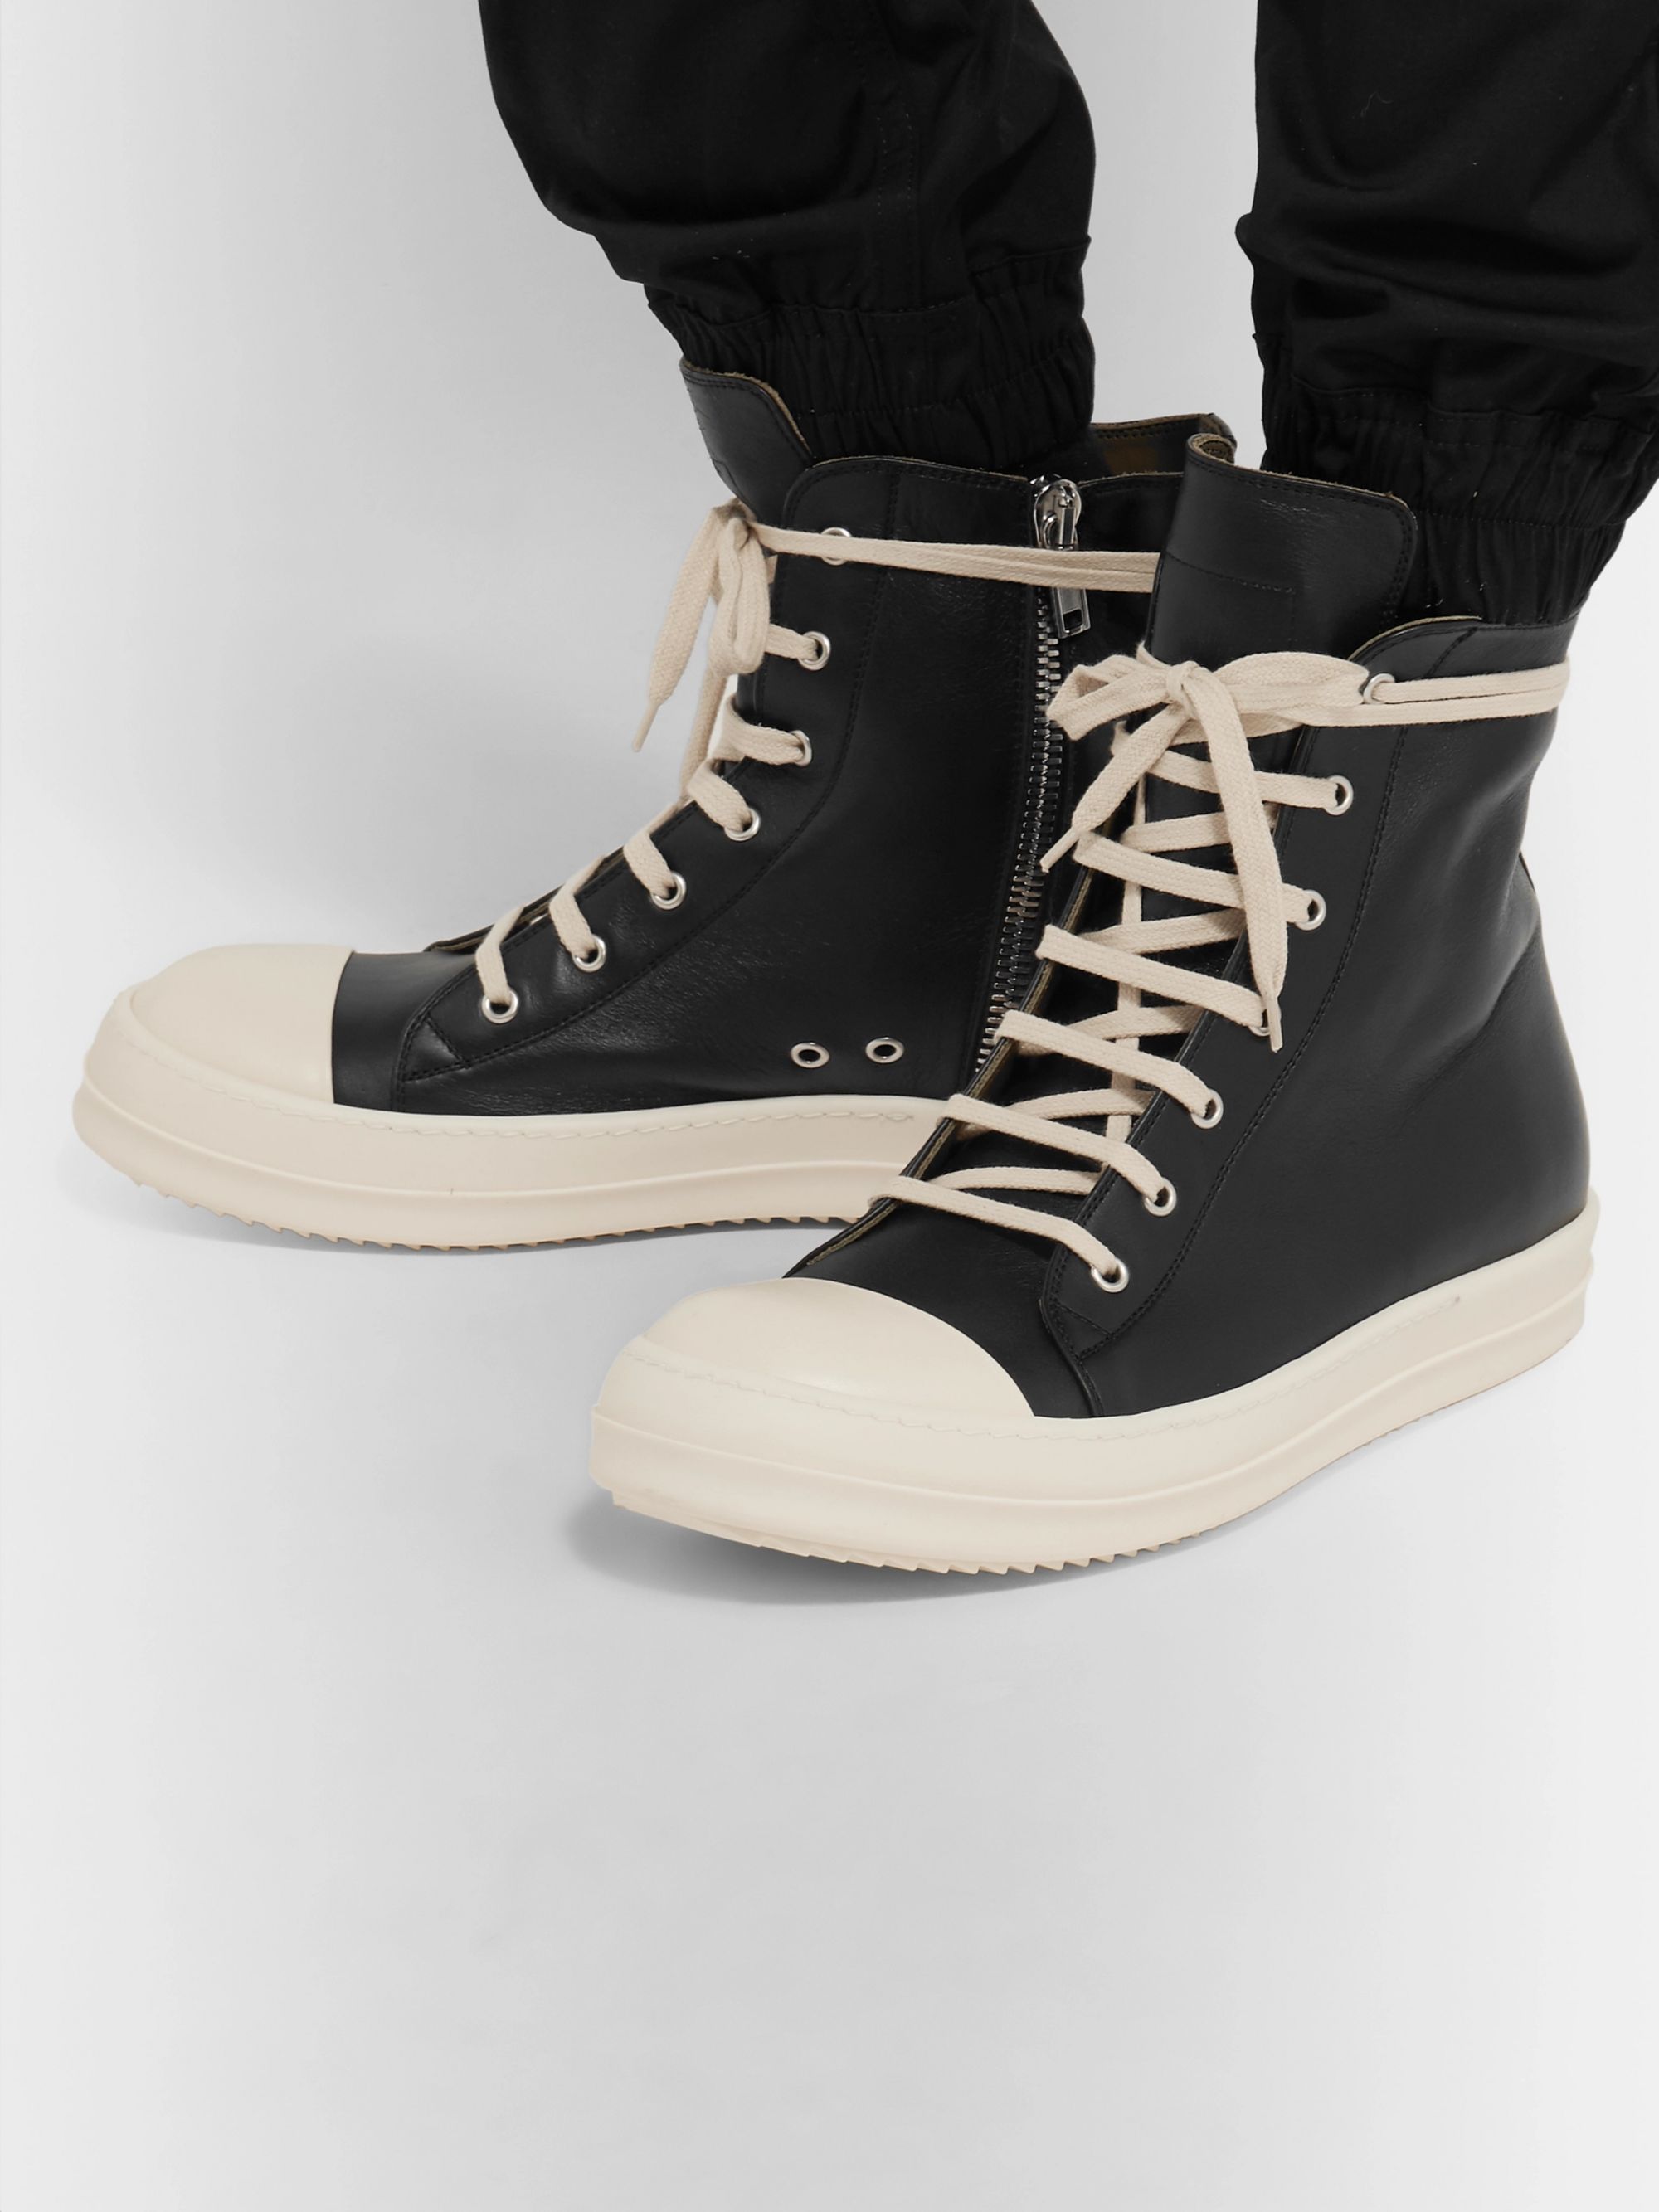 Black Cap-Toe Leather High-Top Sneakers | Rick Owens | MR PORTER